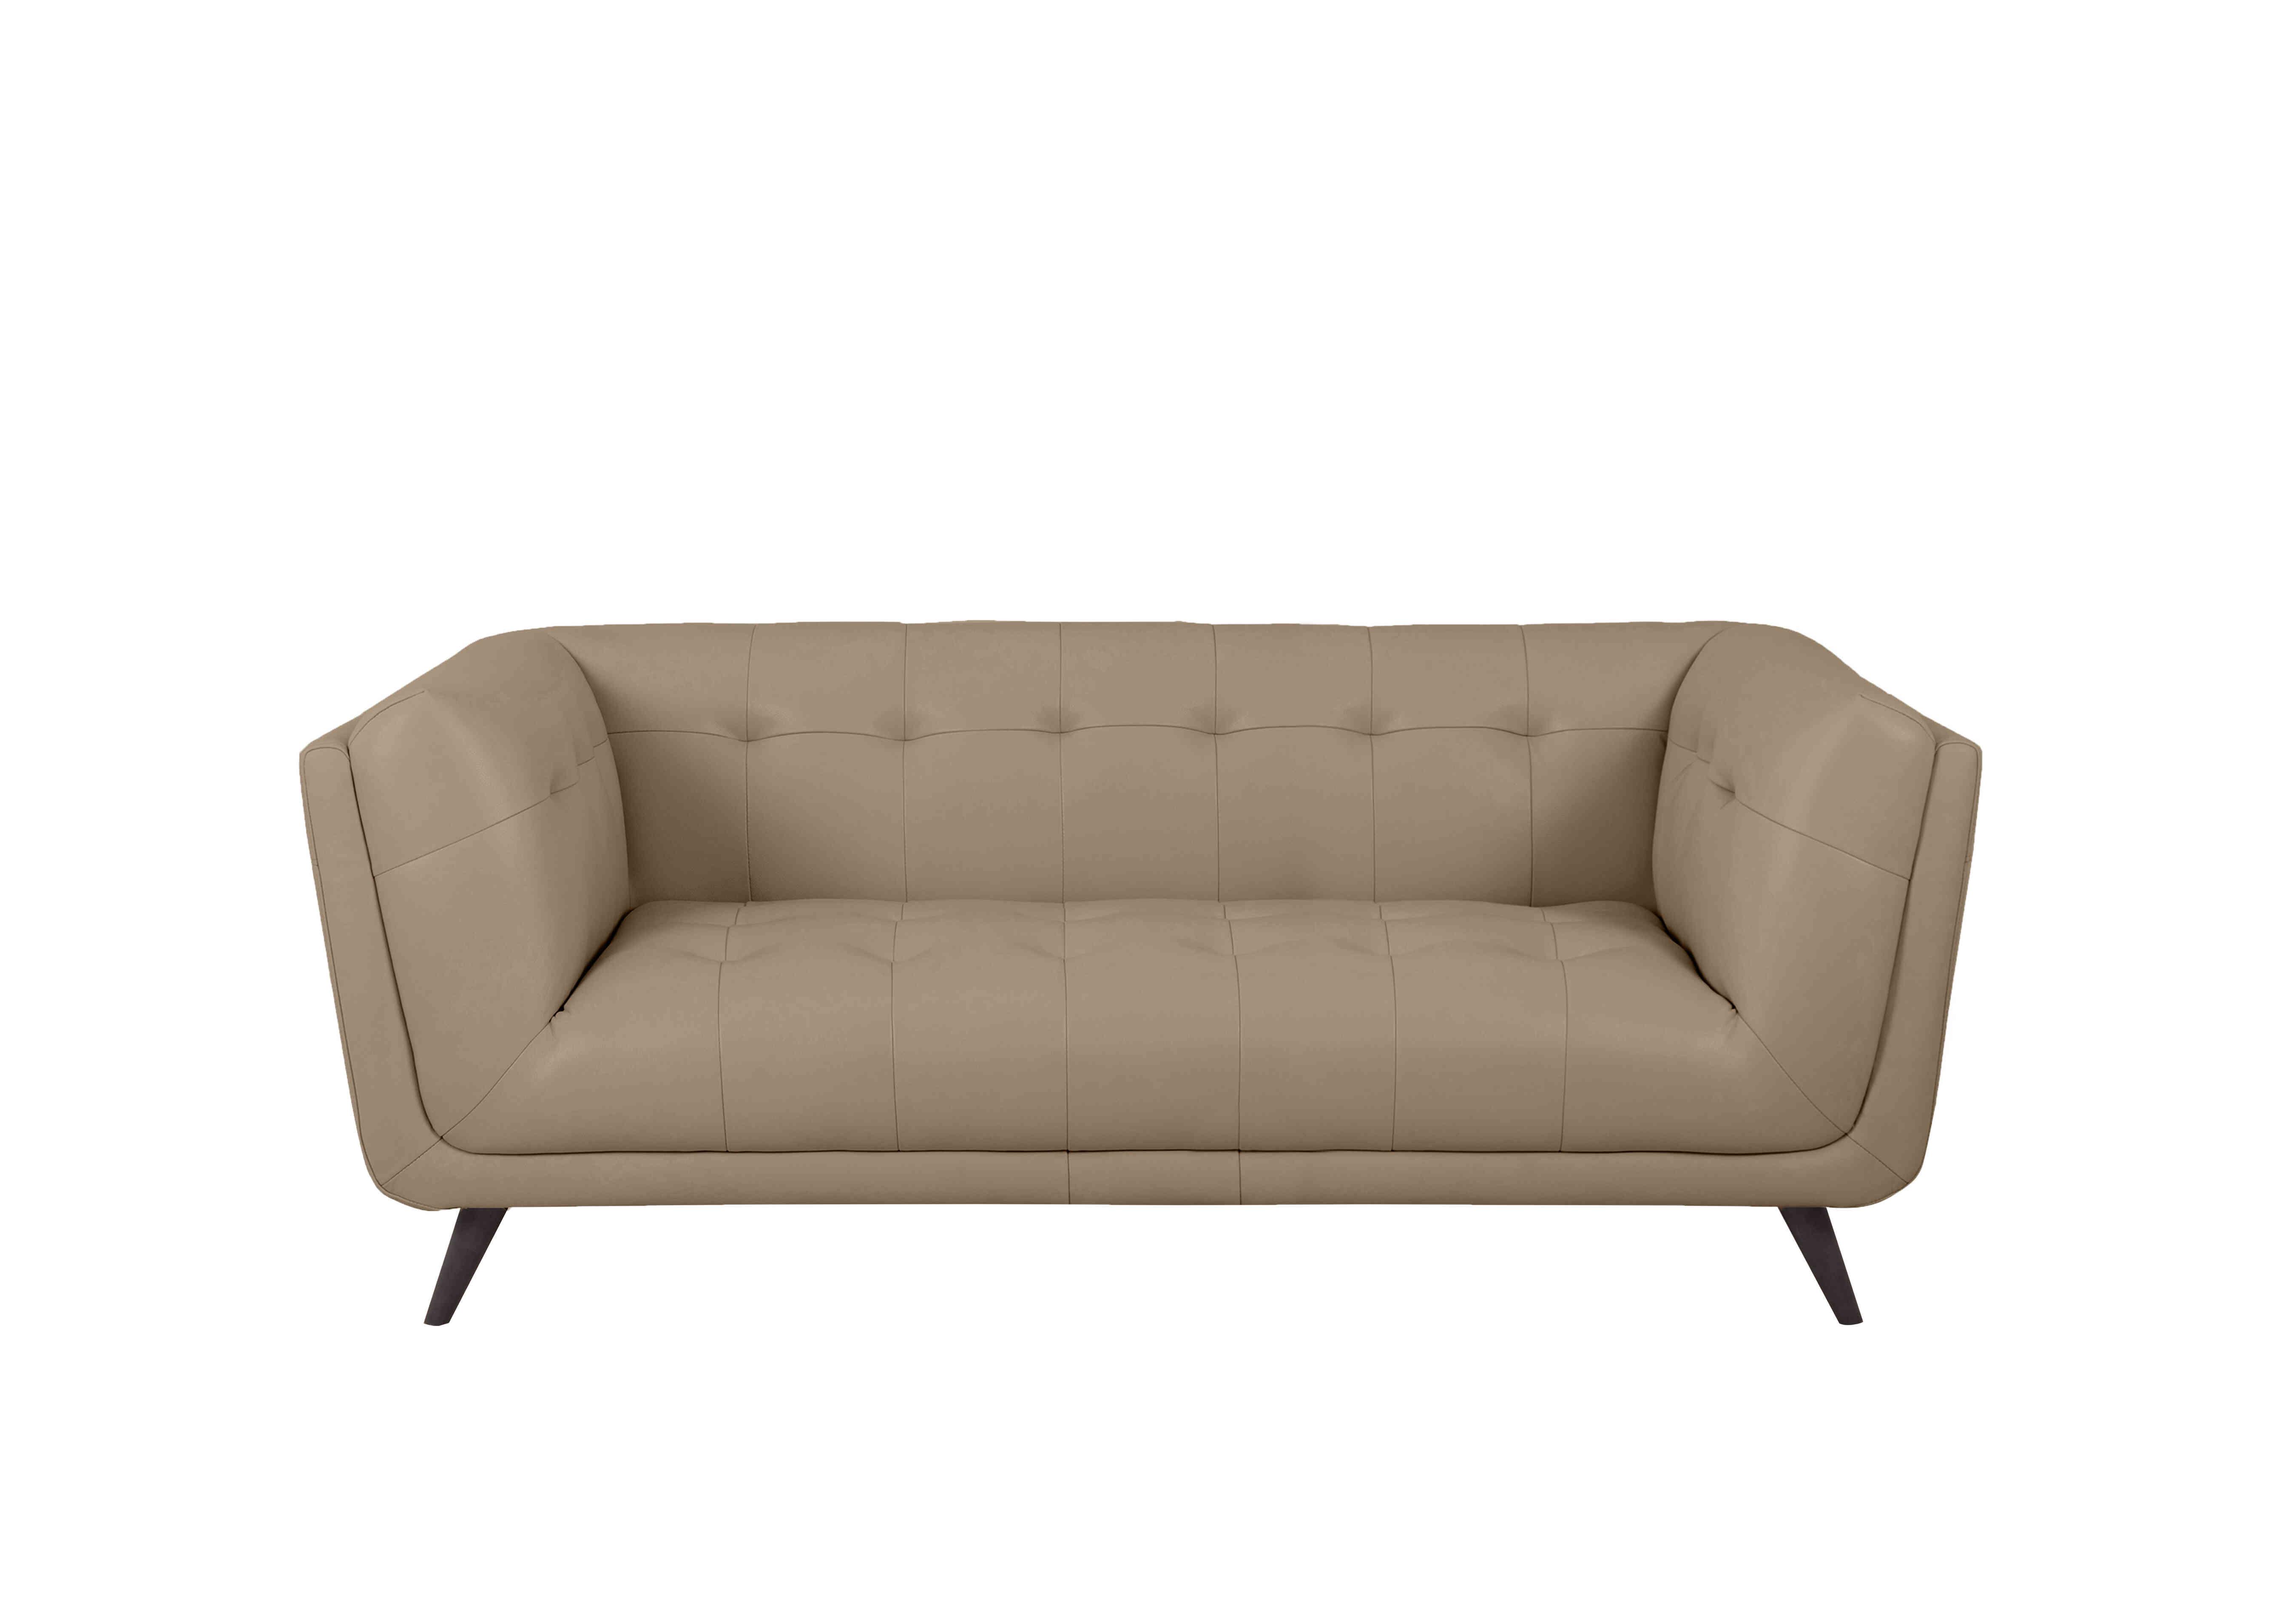 Rene Large 2 Seater Leather Sofa in Montana Barley on Furniture Village